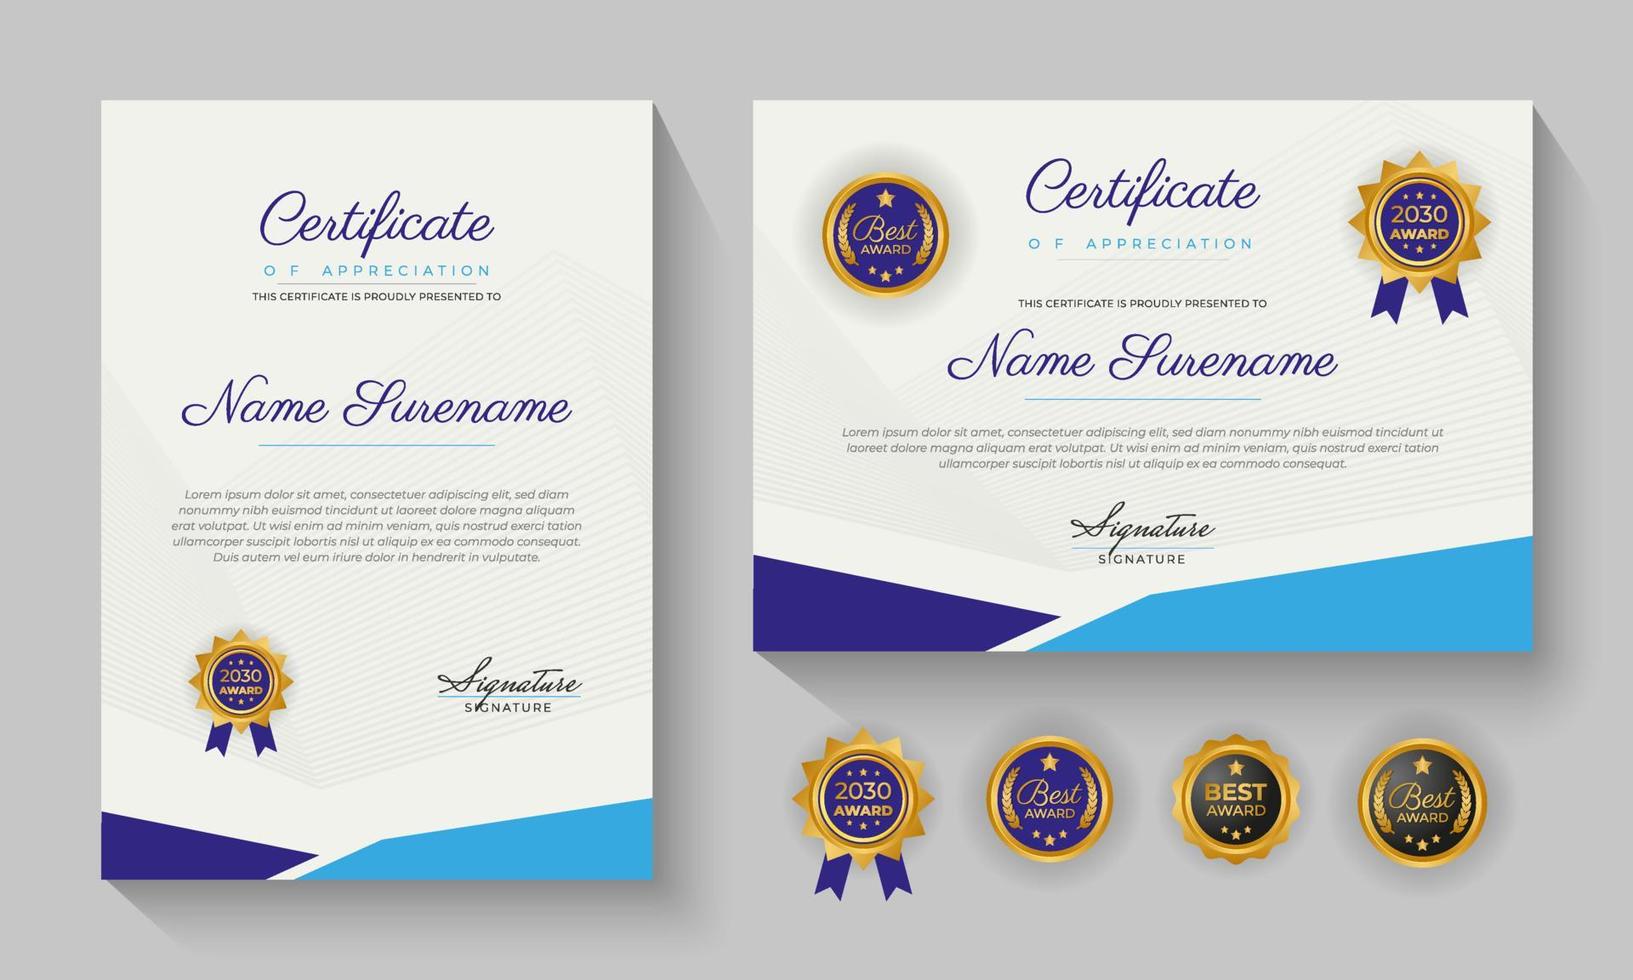 modern blå certifikat av prestation eller certifiering av uppskattning mall design vektor